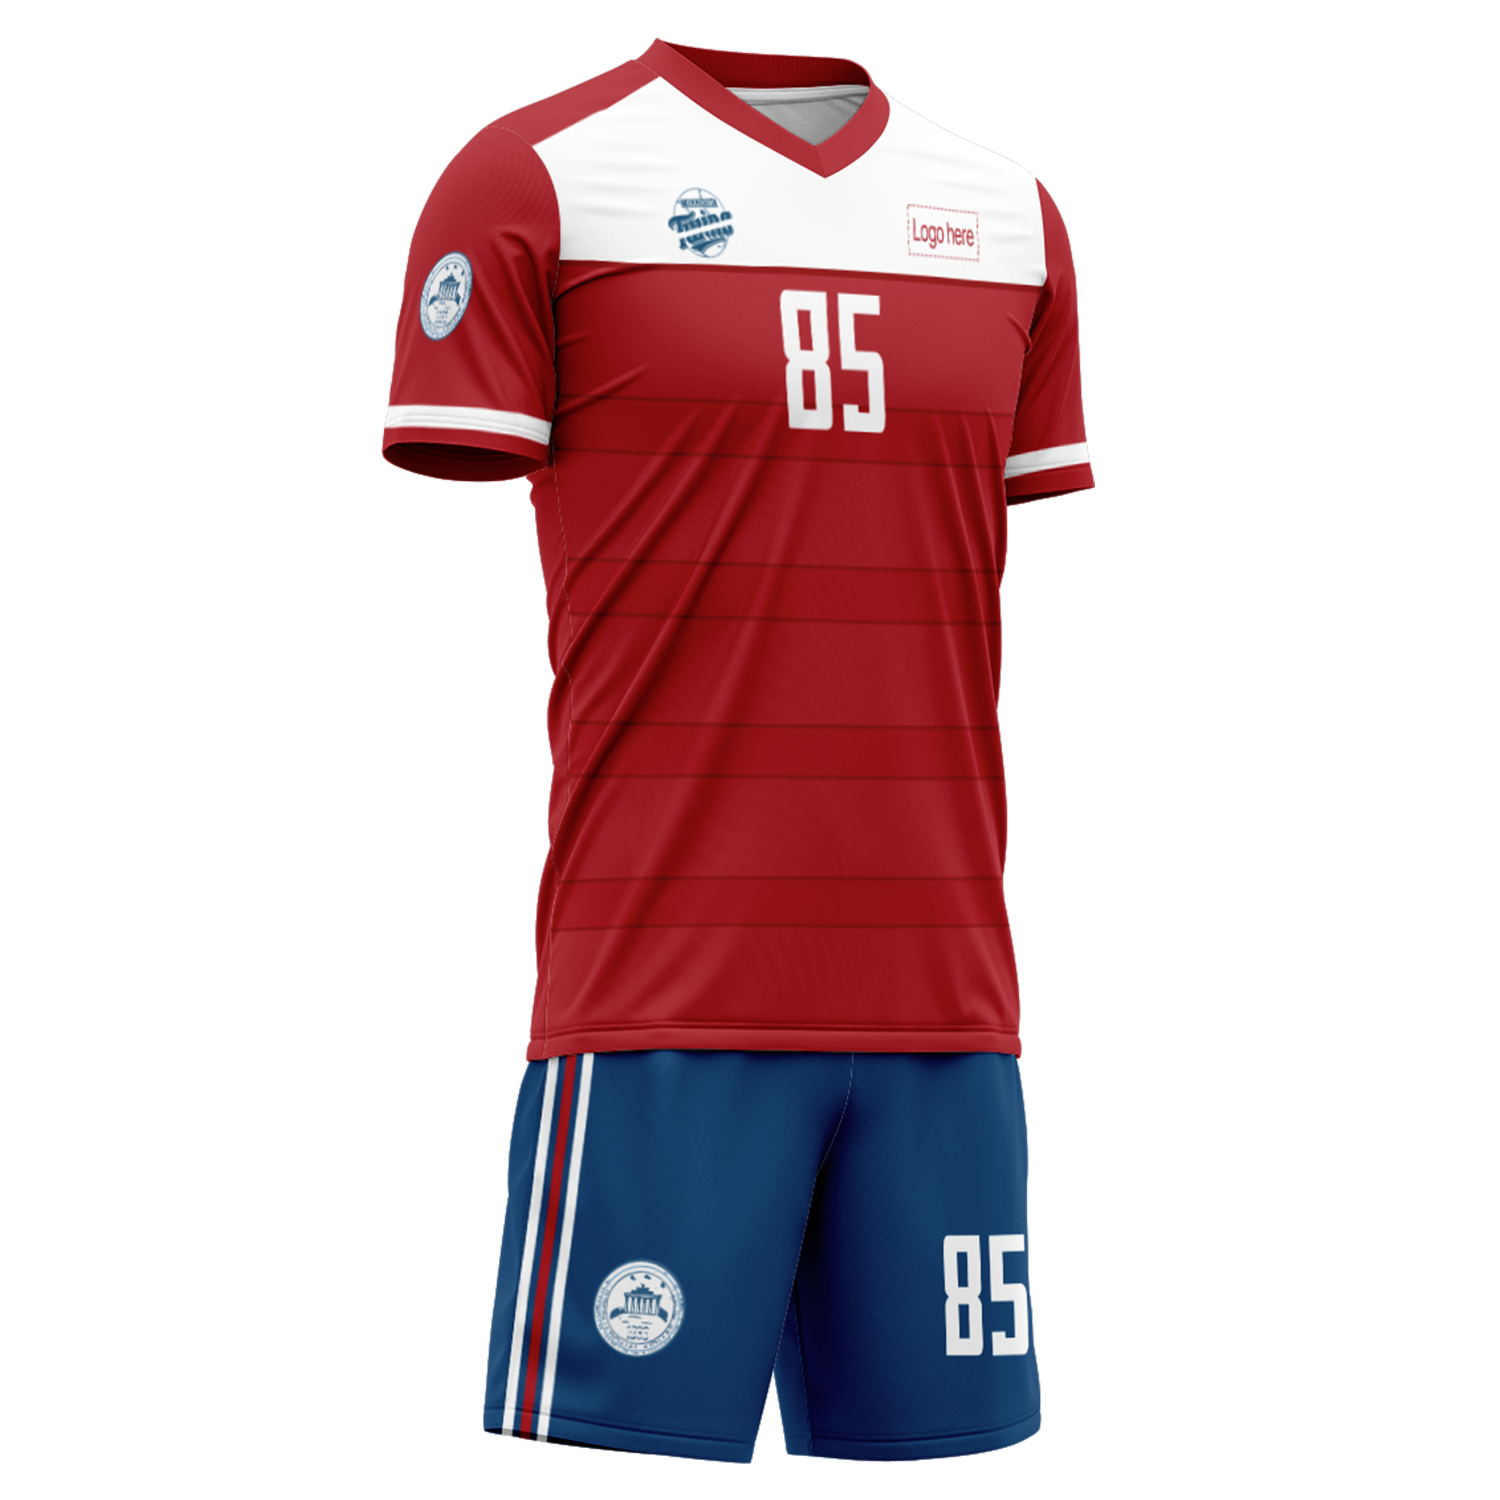 Custom Serbia Team Football Suits Personalized Design Print on Demand Soccer Jerseys